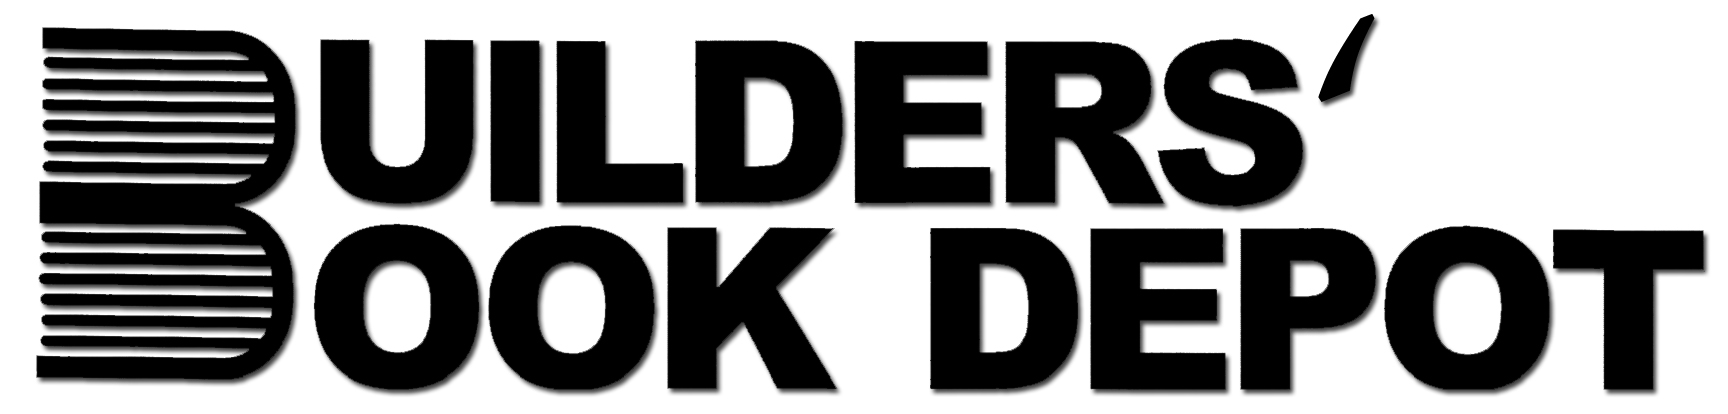 Builders Book Depot logo